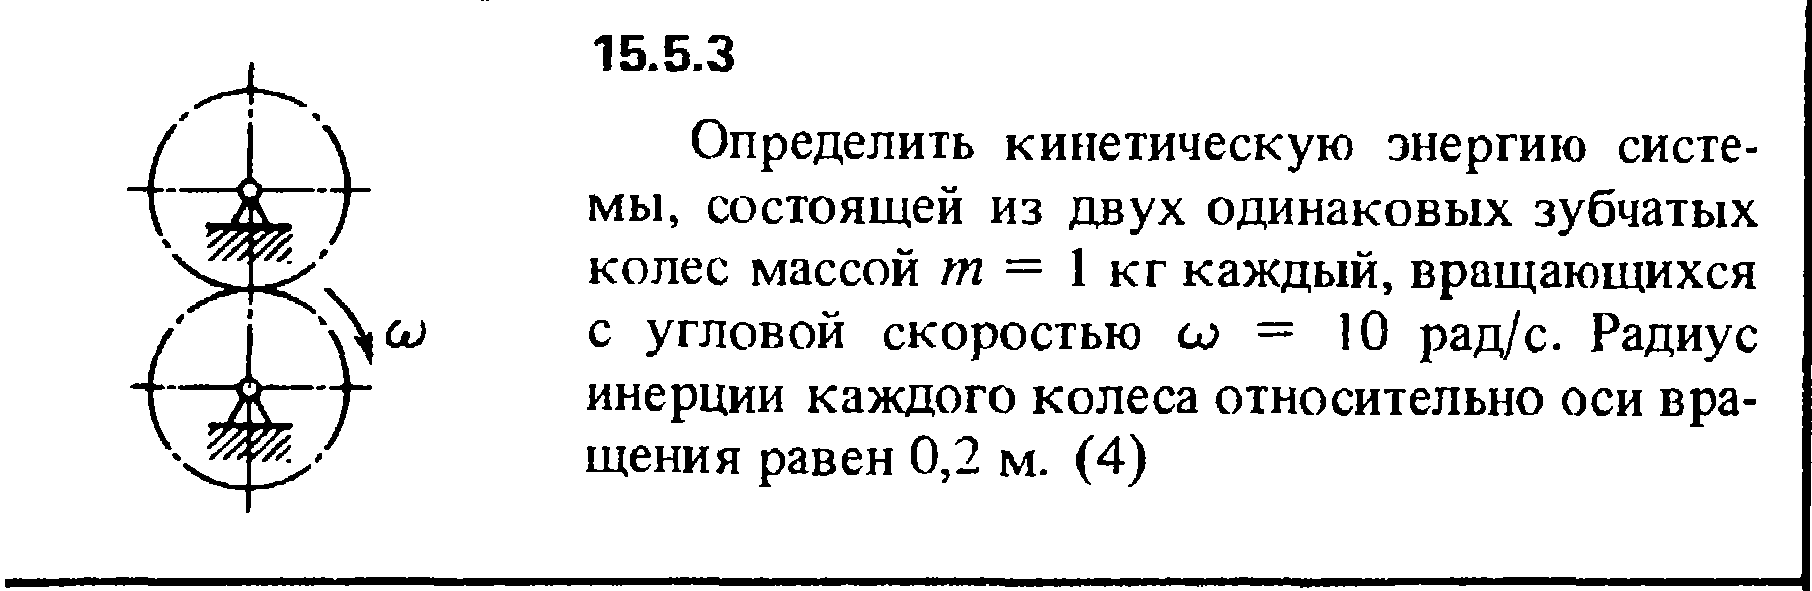 Решение задачи 15.5.3 из сборника Кепе О.Е. 1989 года